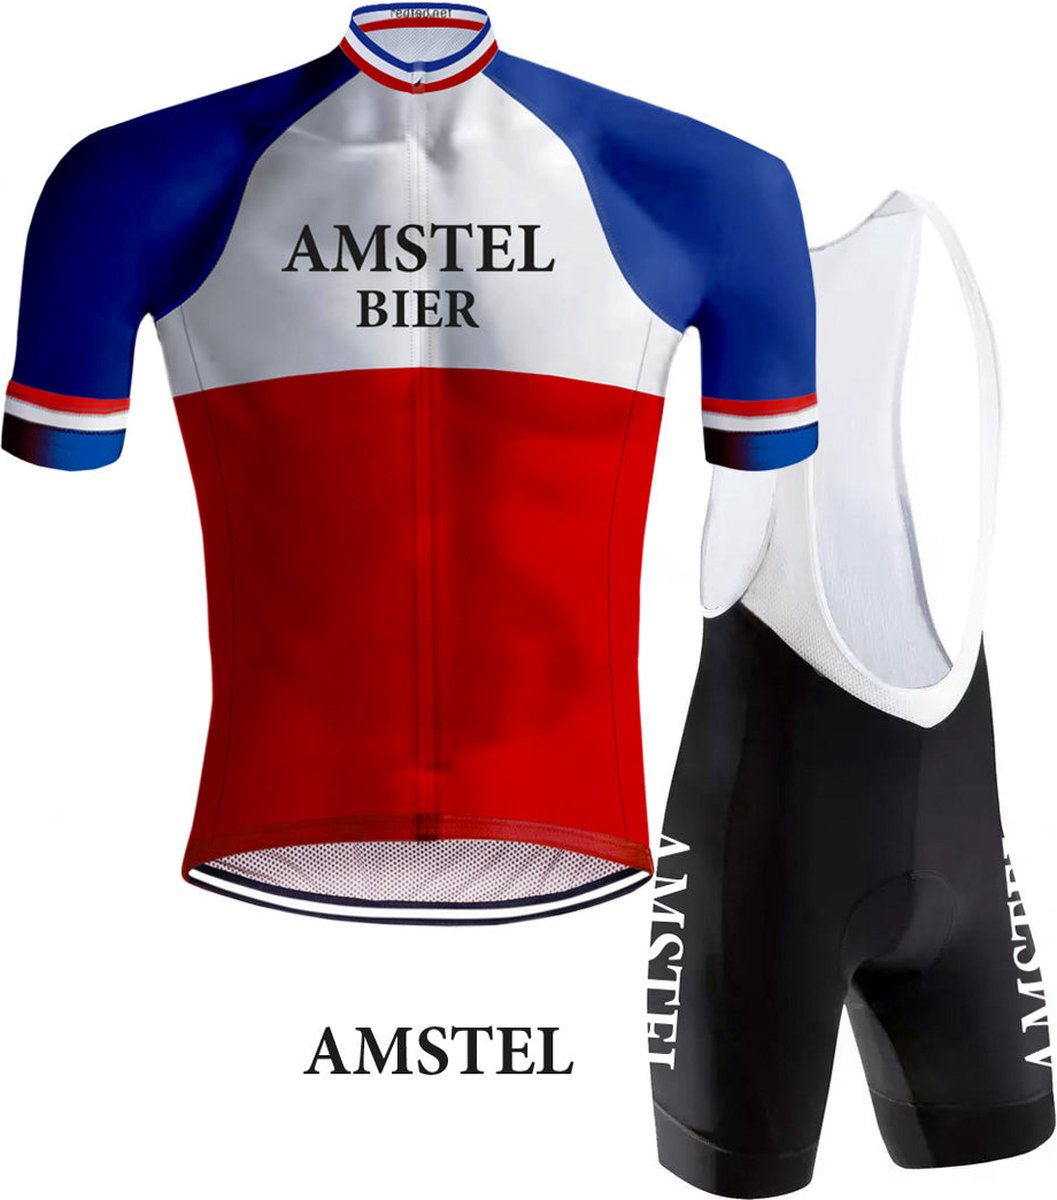 Retro Wielertenue Amstel Bier Rood/Blauw - REDTED (5XL)